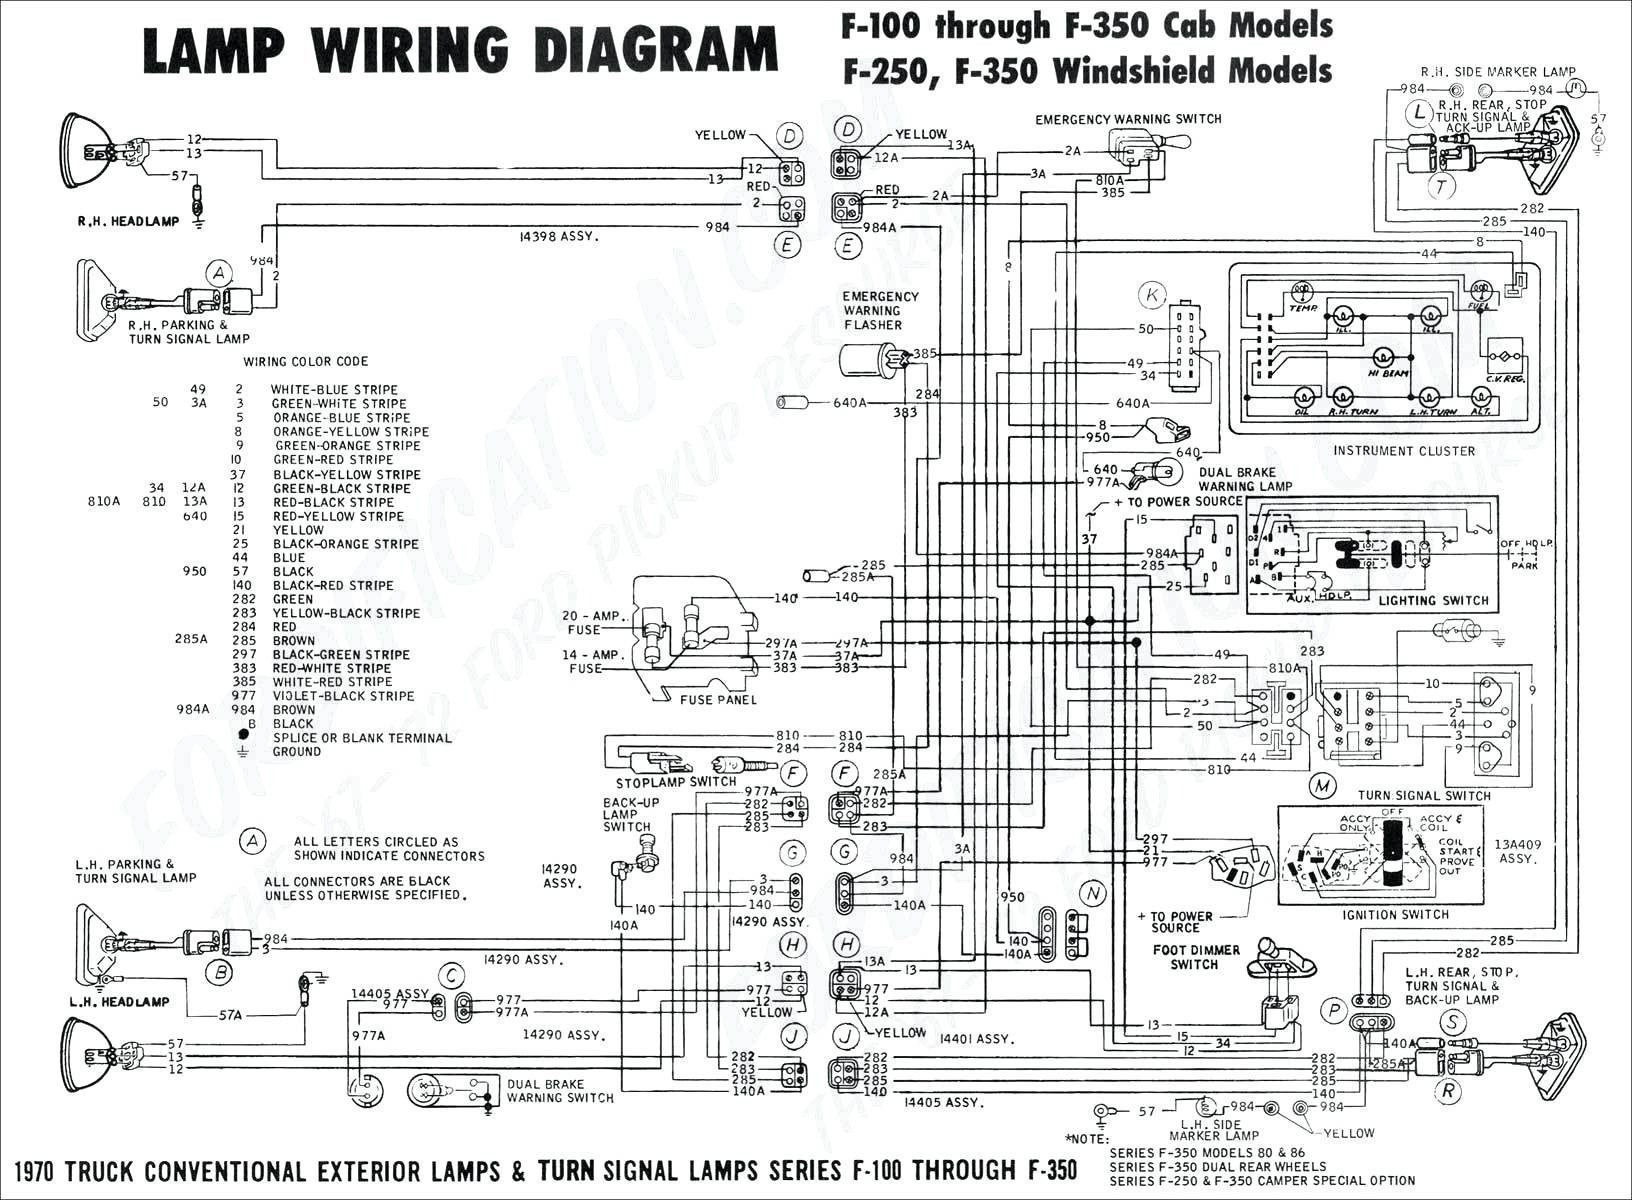 Big Dog Wiring Diagram | Wiring Diagram - Simple Motorcycle Wiring Diagram